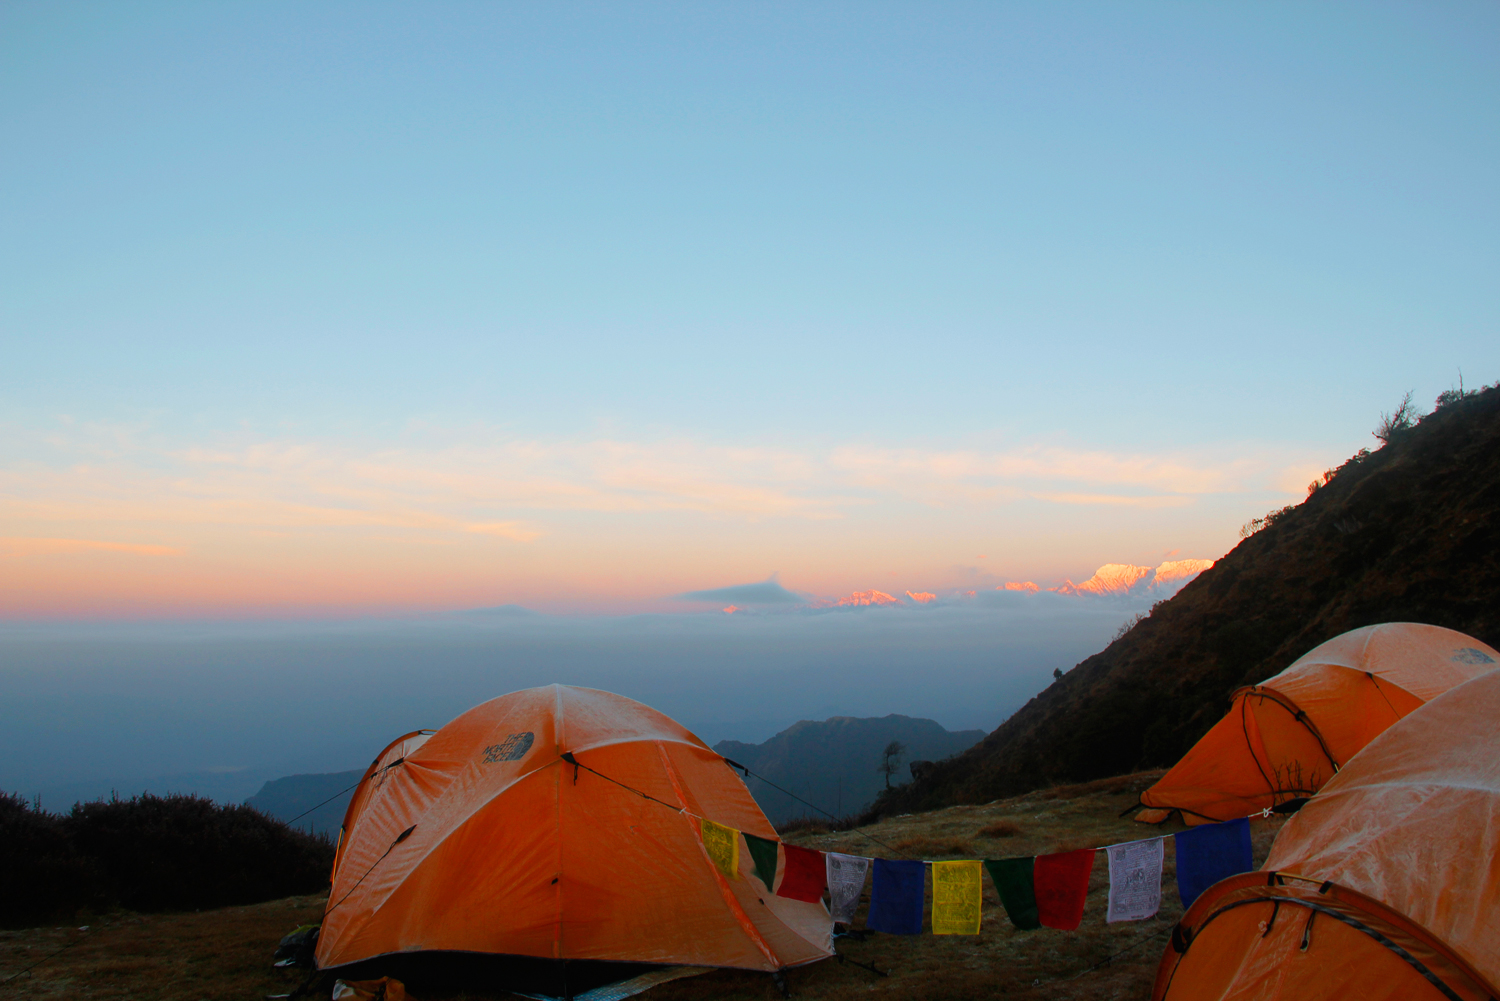 Nepal.EastNepal.Dobate.Sunrise.Clouds.Tents.PrayerFlags.Frost.Himalayas1.jpg